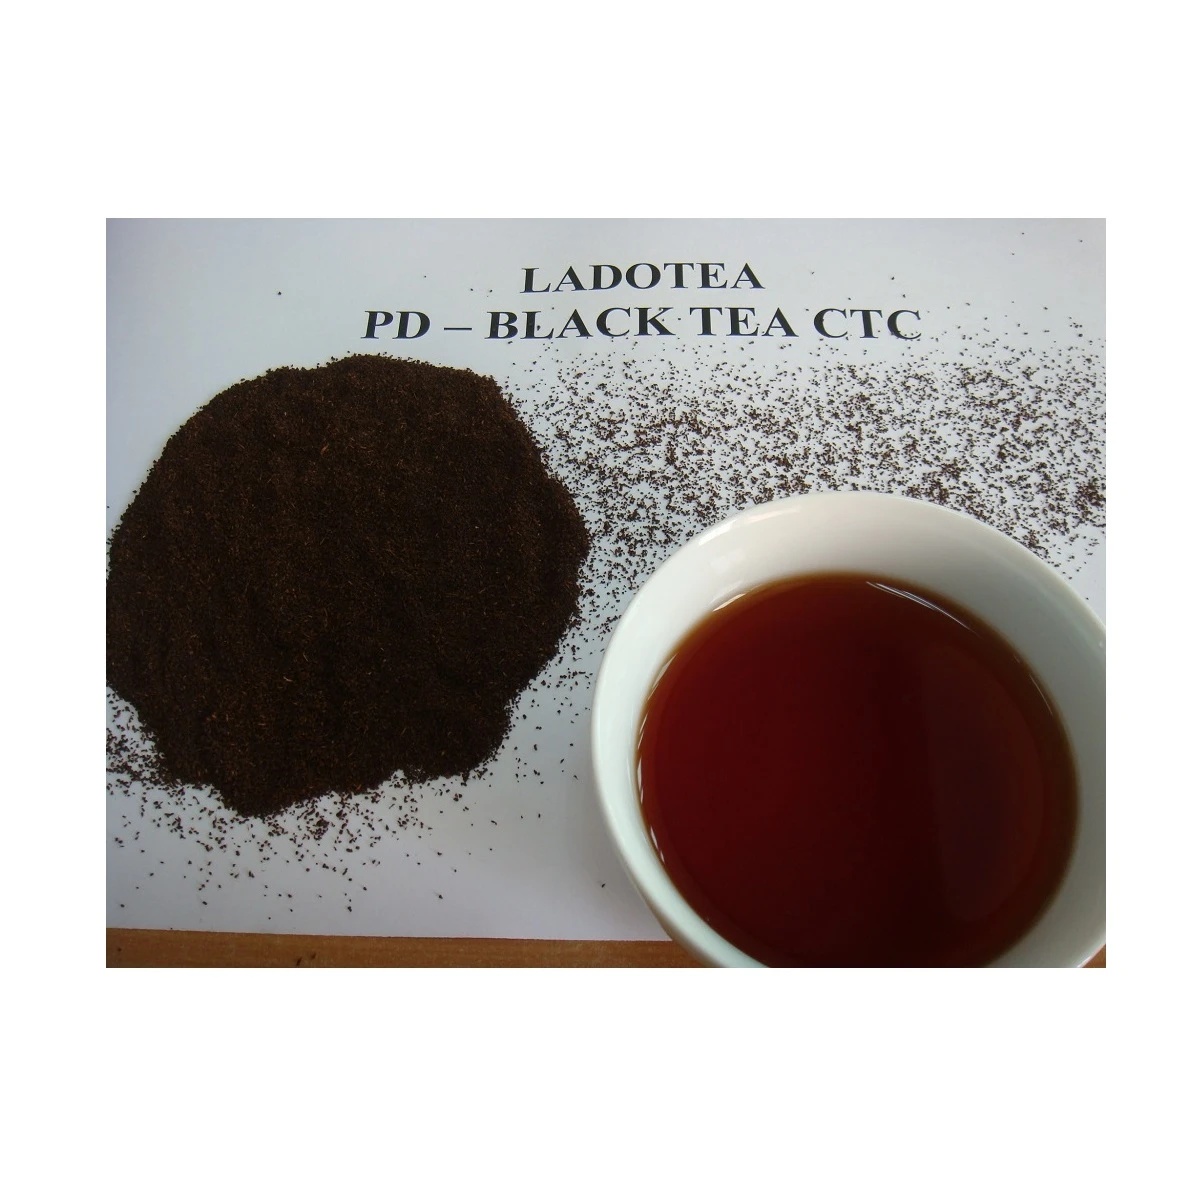 Special Grade Wholesale Ladotea Brand Organic PD - Black Tea LTC From Vietnam